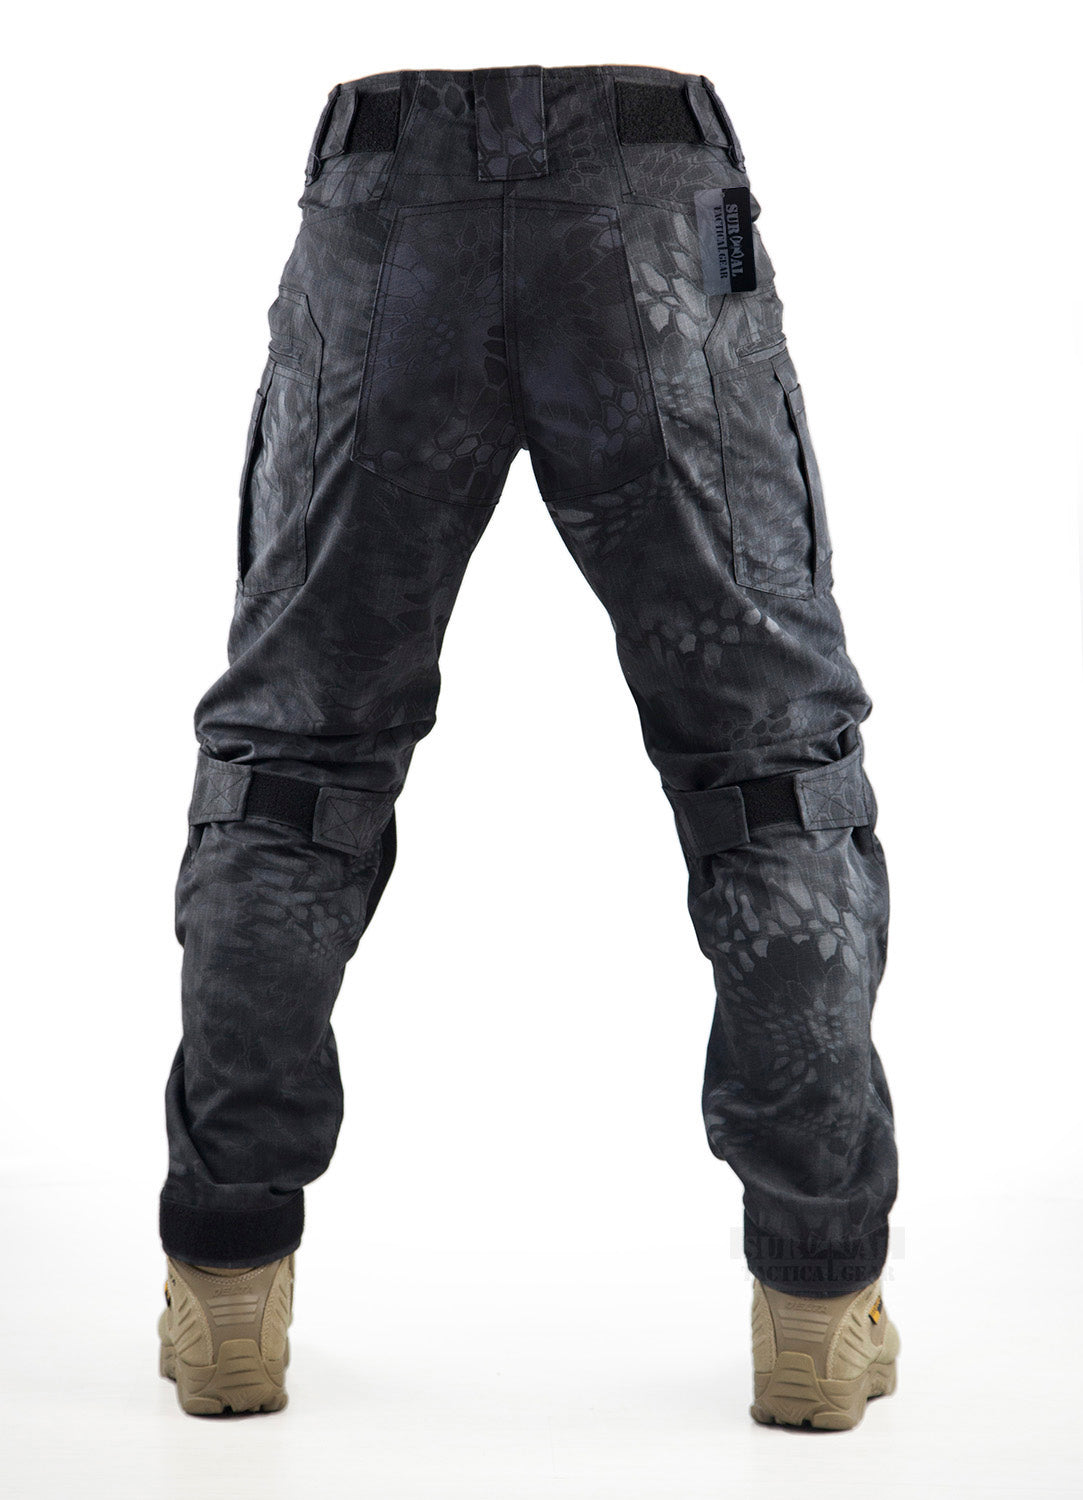 Invader Gear Combat Pants Predator marpat  Invader Gear Combat Pants  Predator marpat  Field Trousers  Military Clothing  Clothing